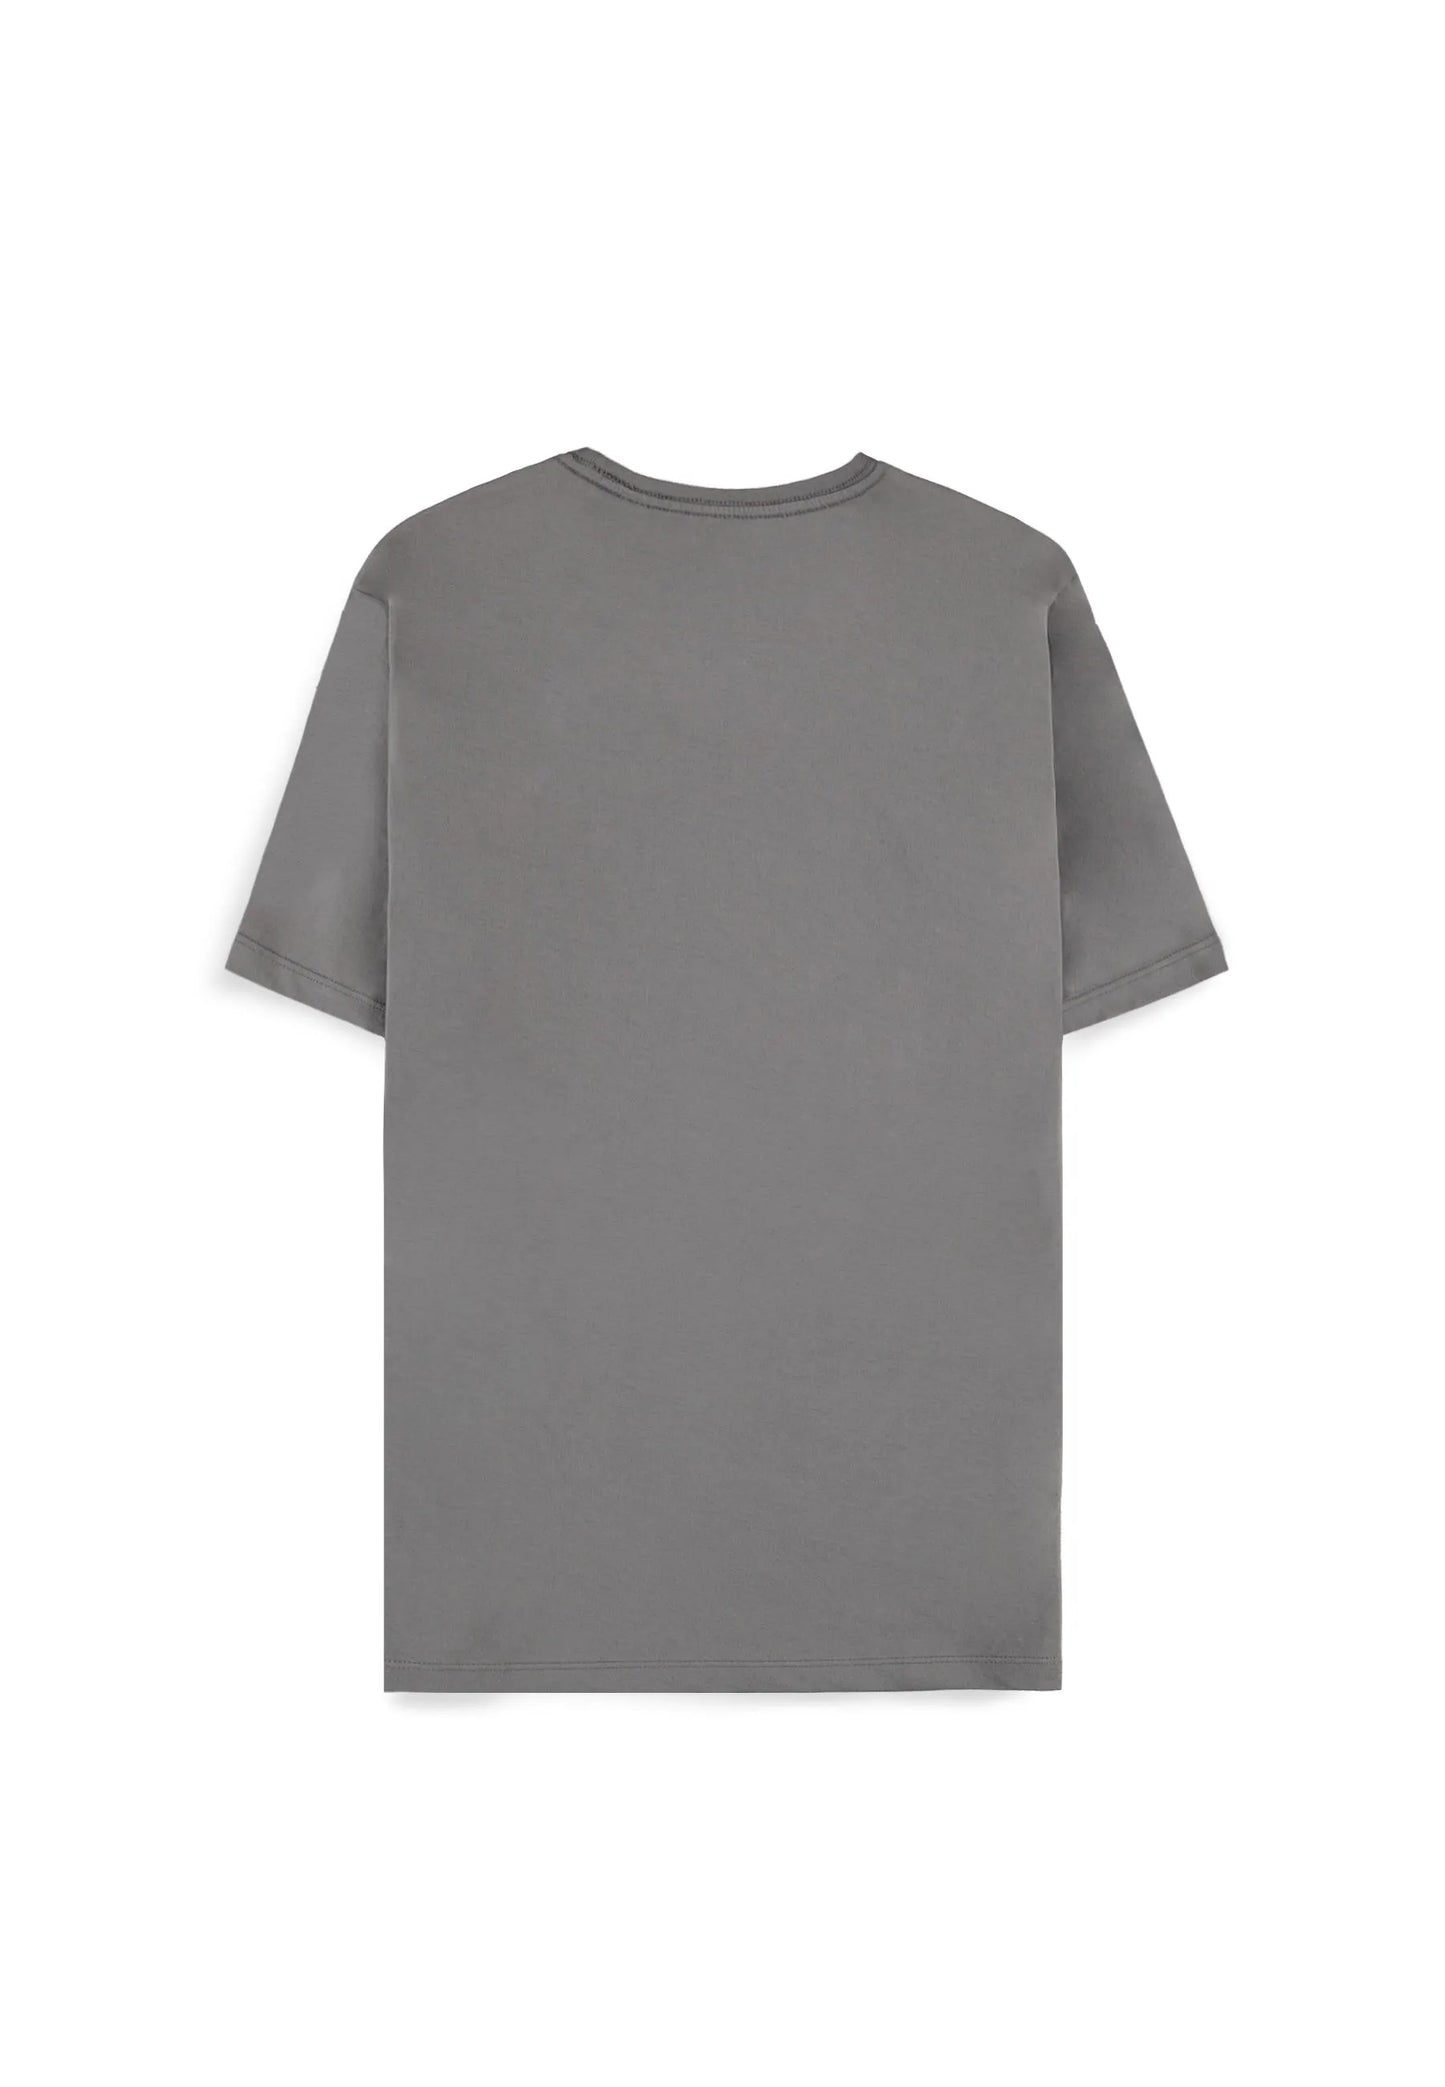 POKEMON - Snorlax Grey Short Sleeved T-Shirt